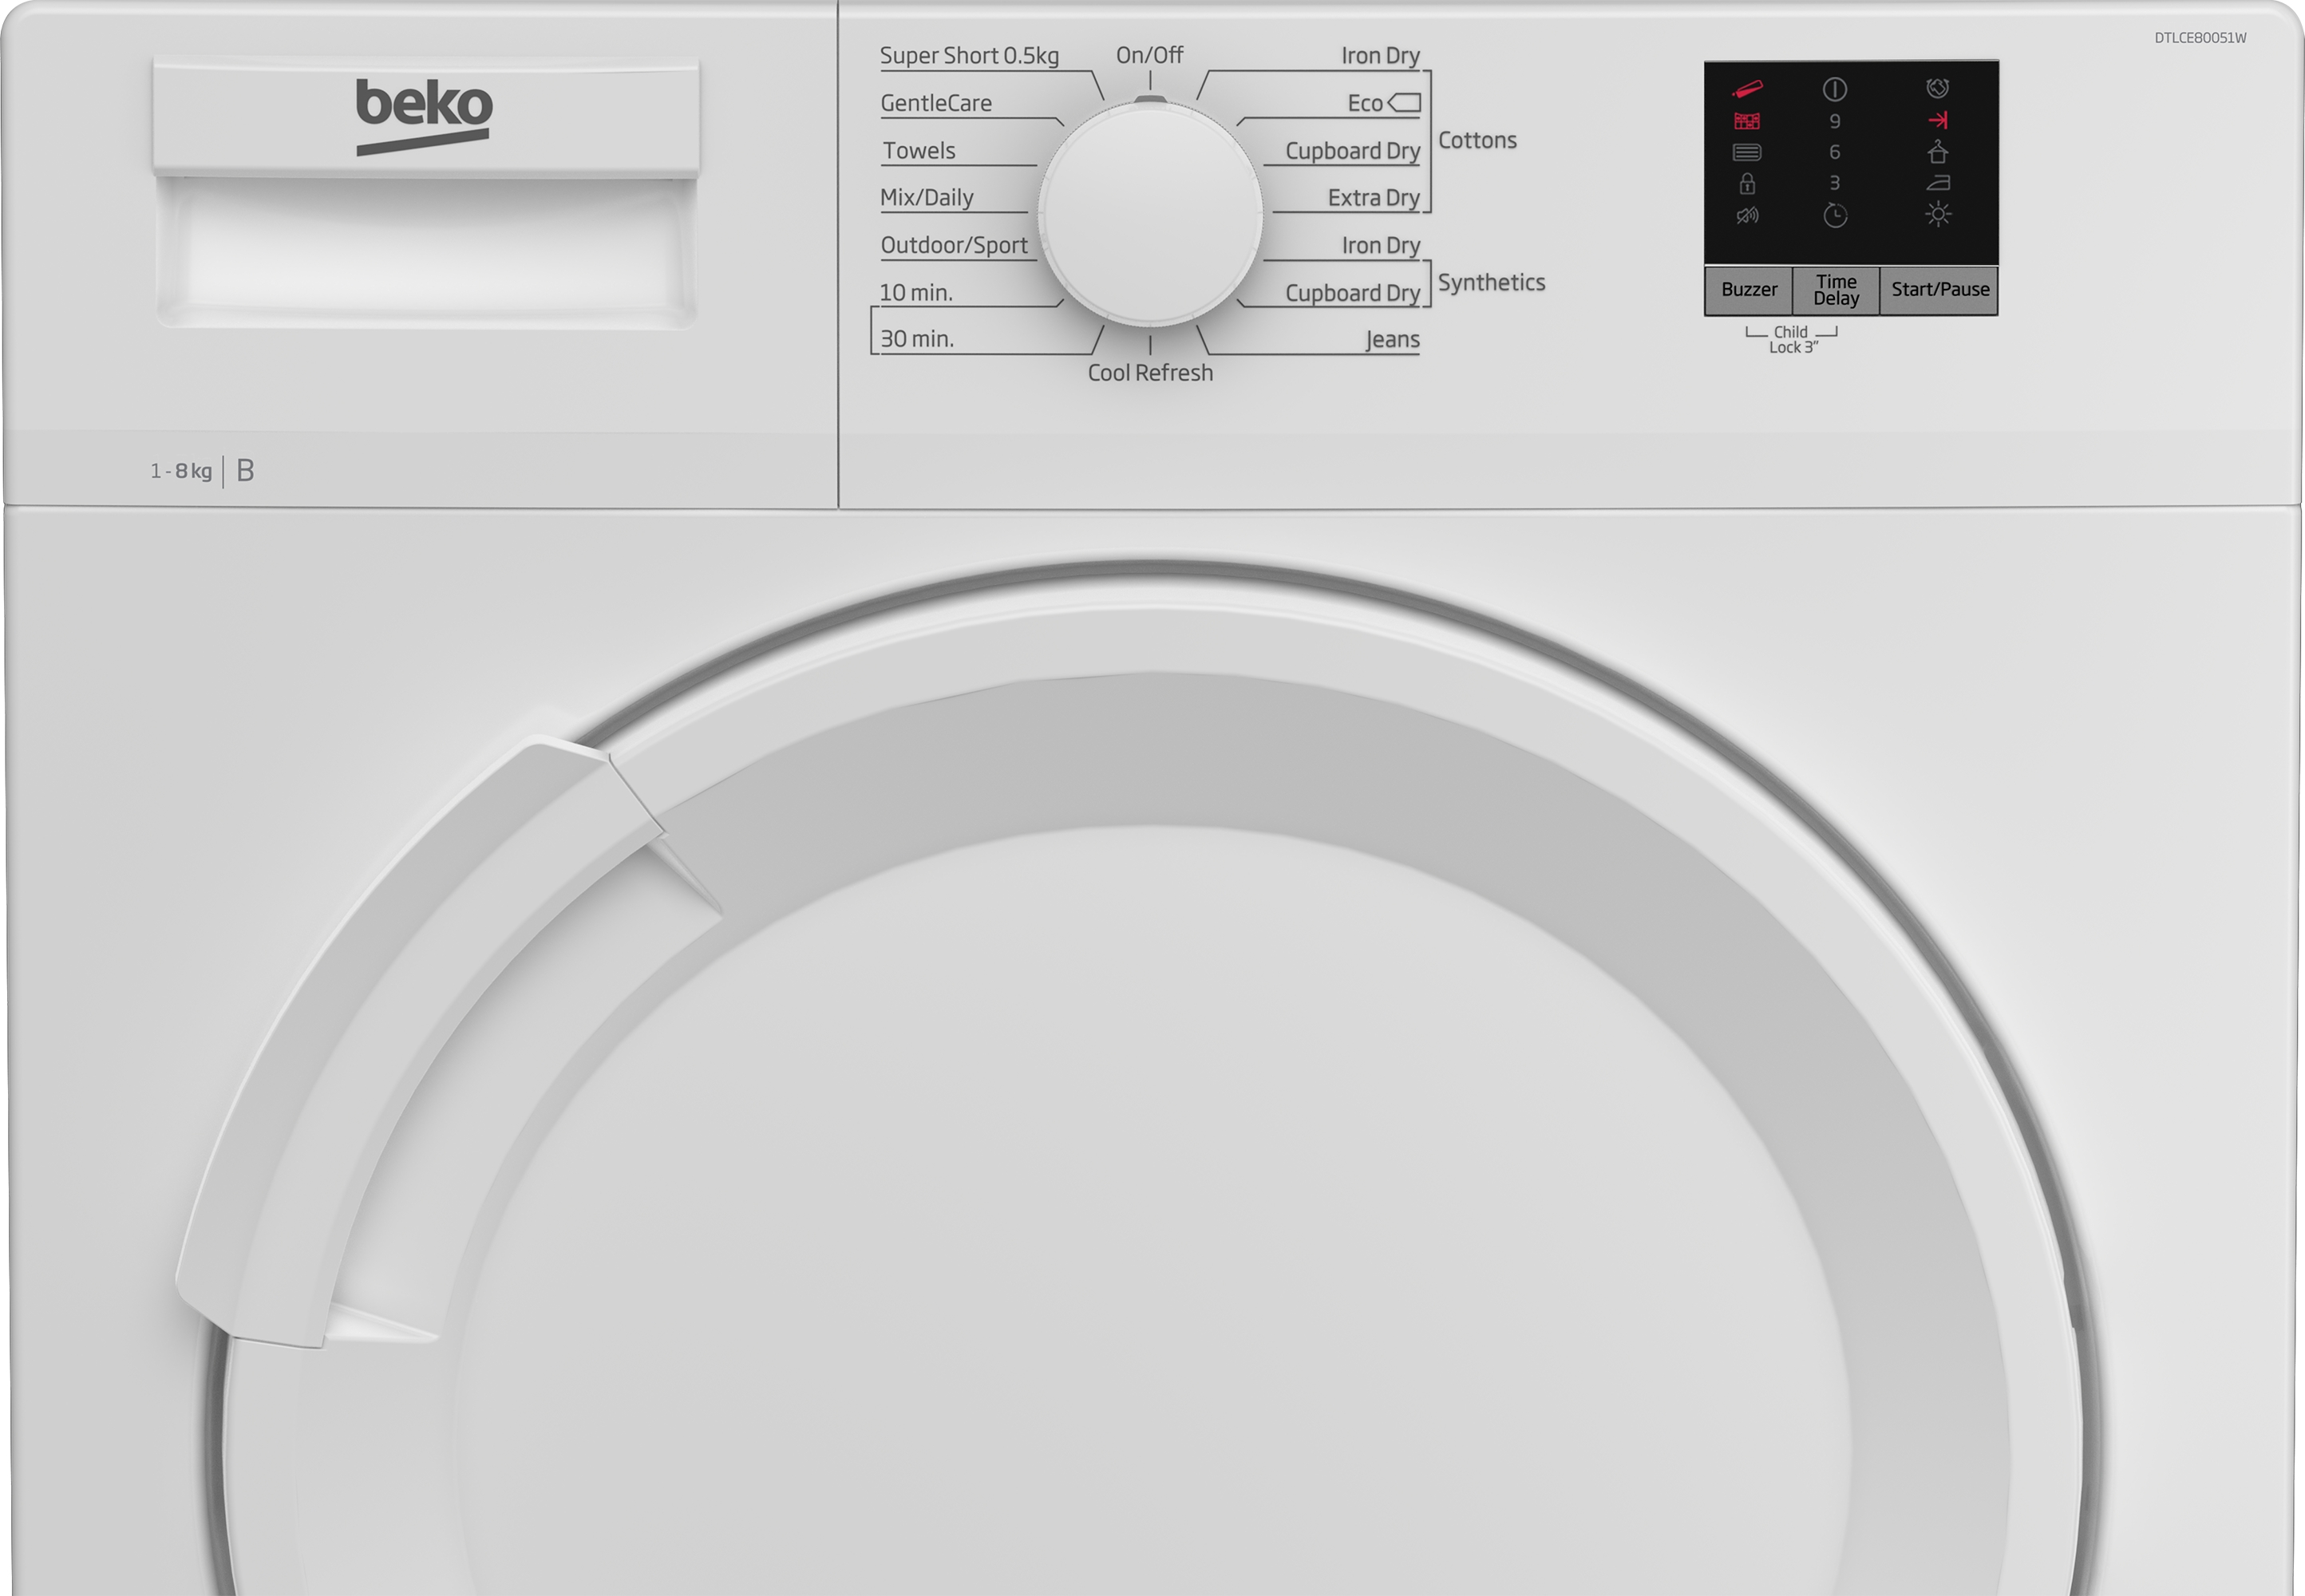 Beko Freestanding Condenser Tumble Dryer, 8kg Load, White - DTLCE80051W 